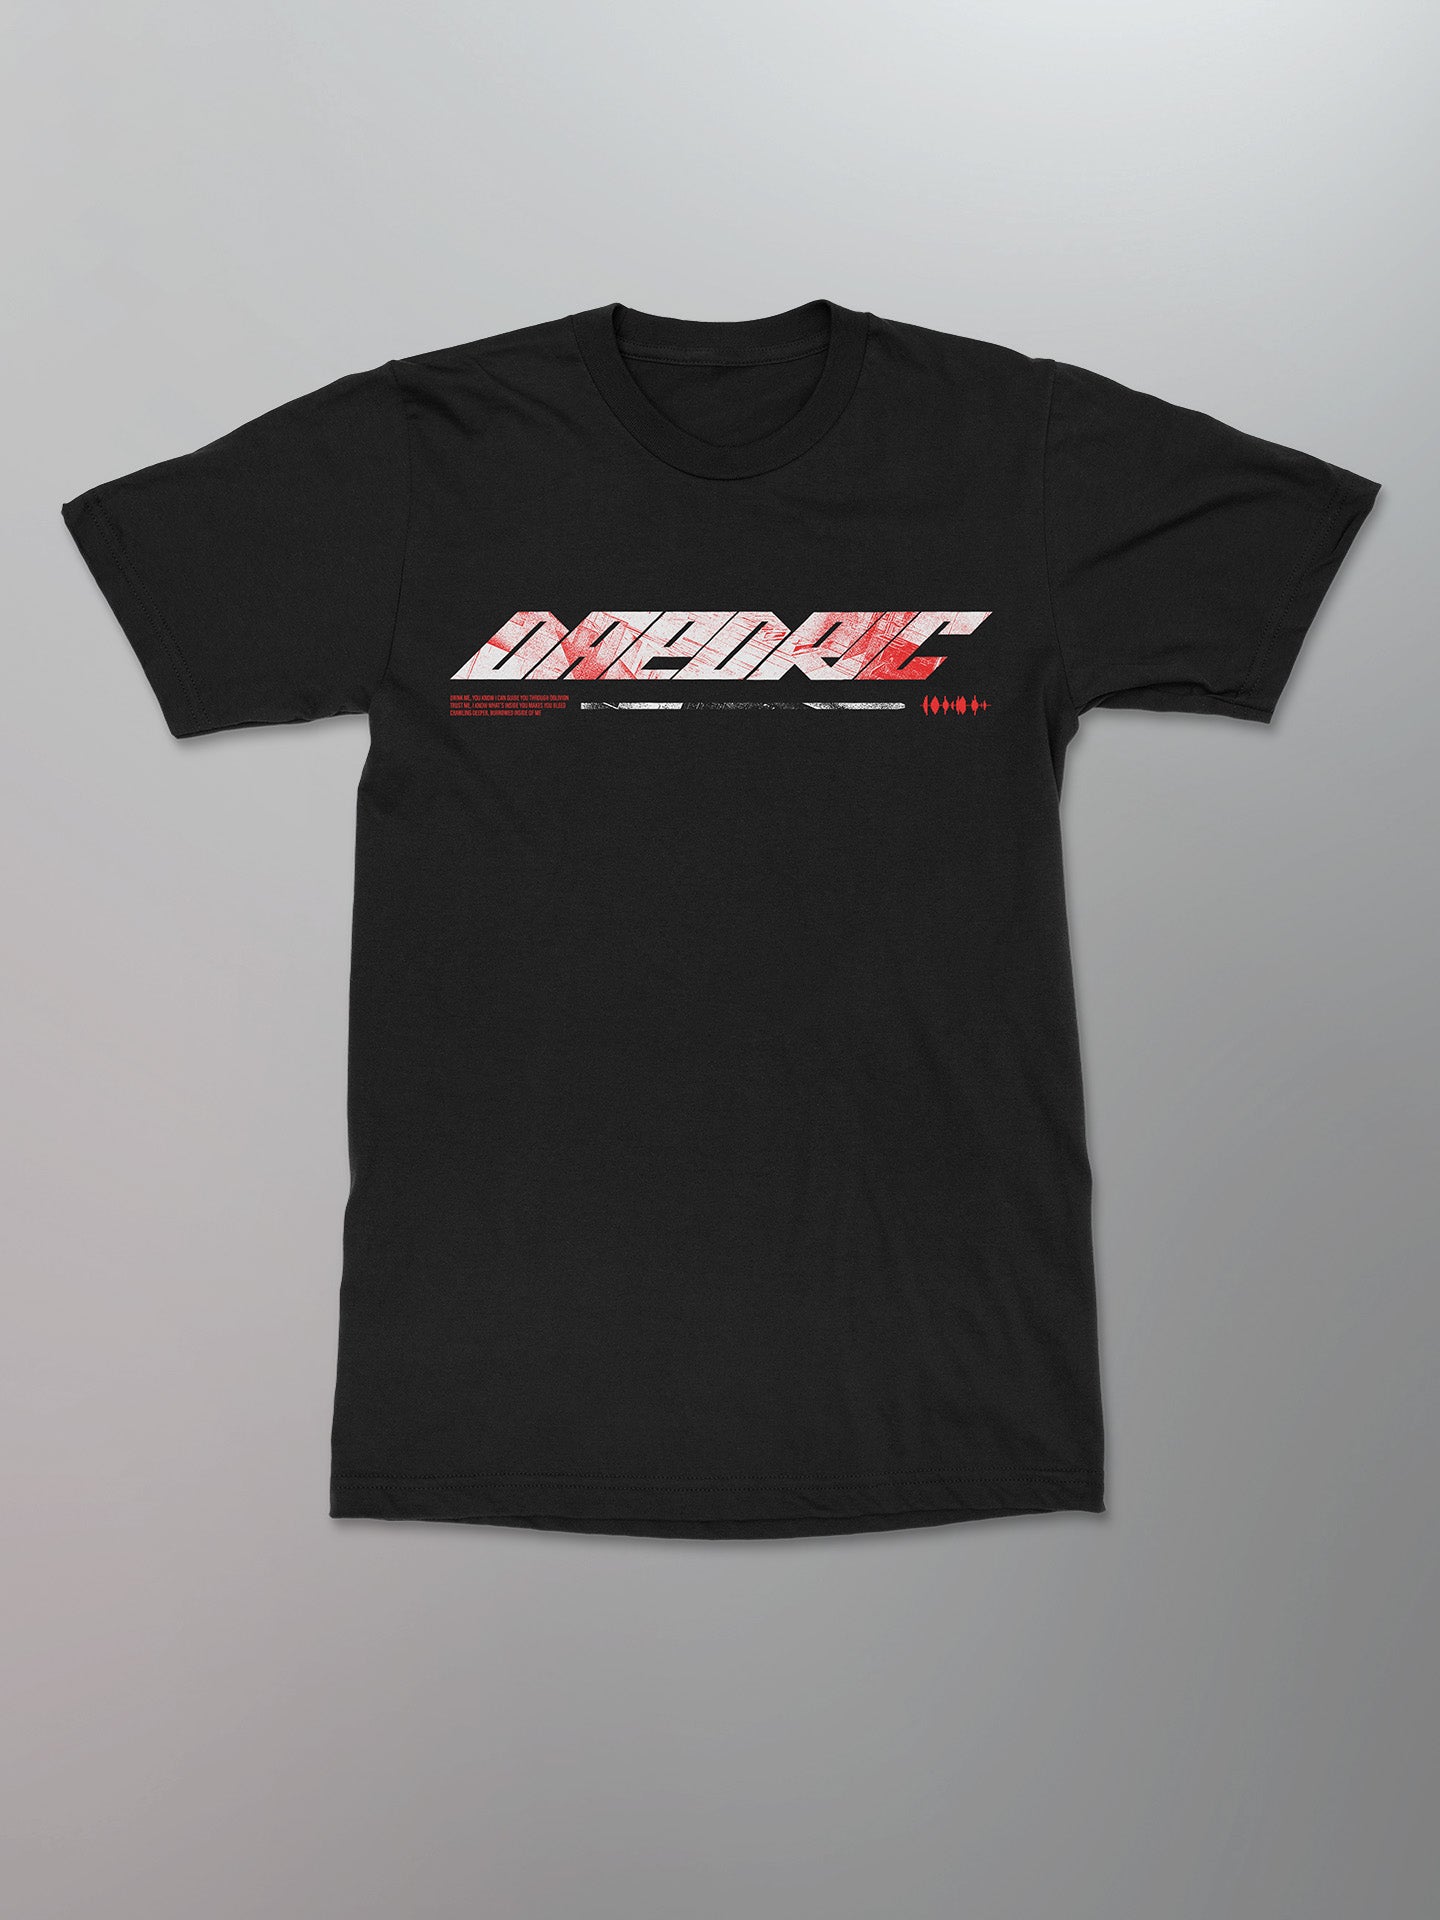 Daedric - Revenge Shirt